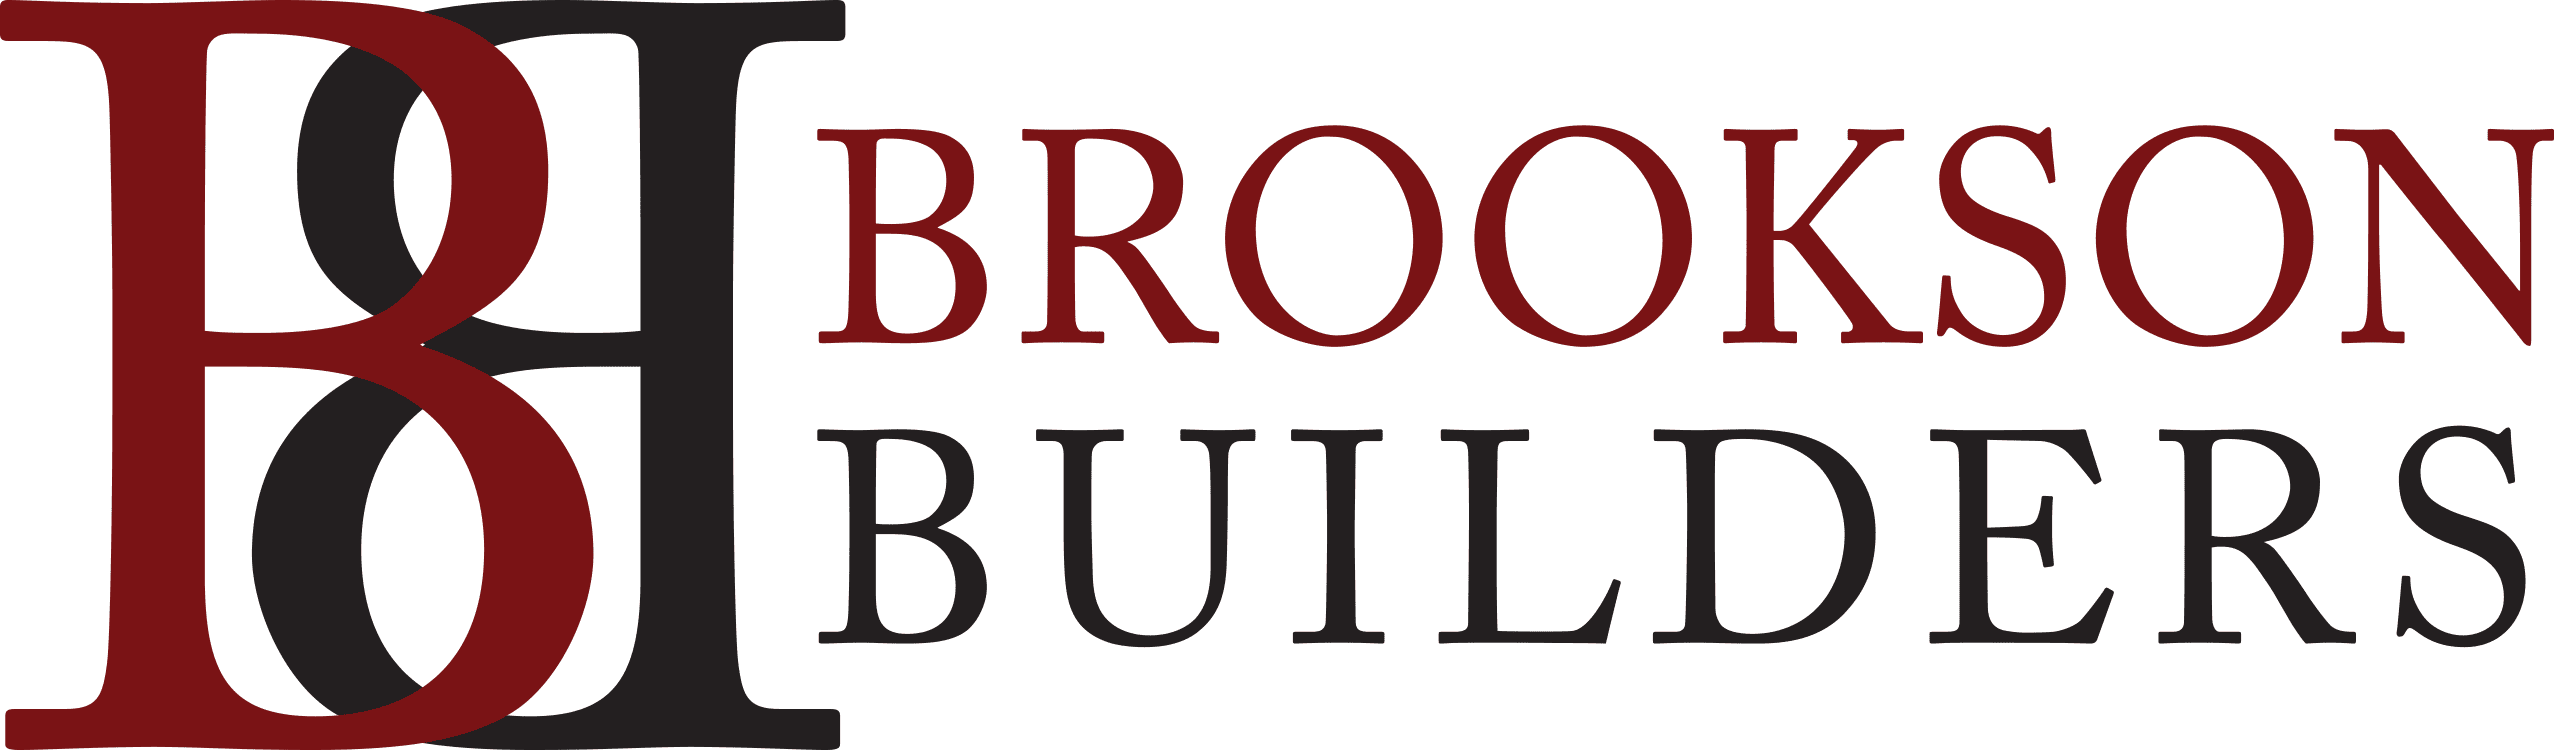 Brookson Builders